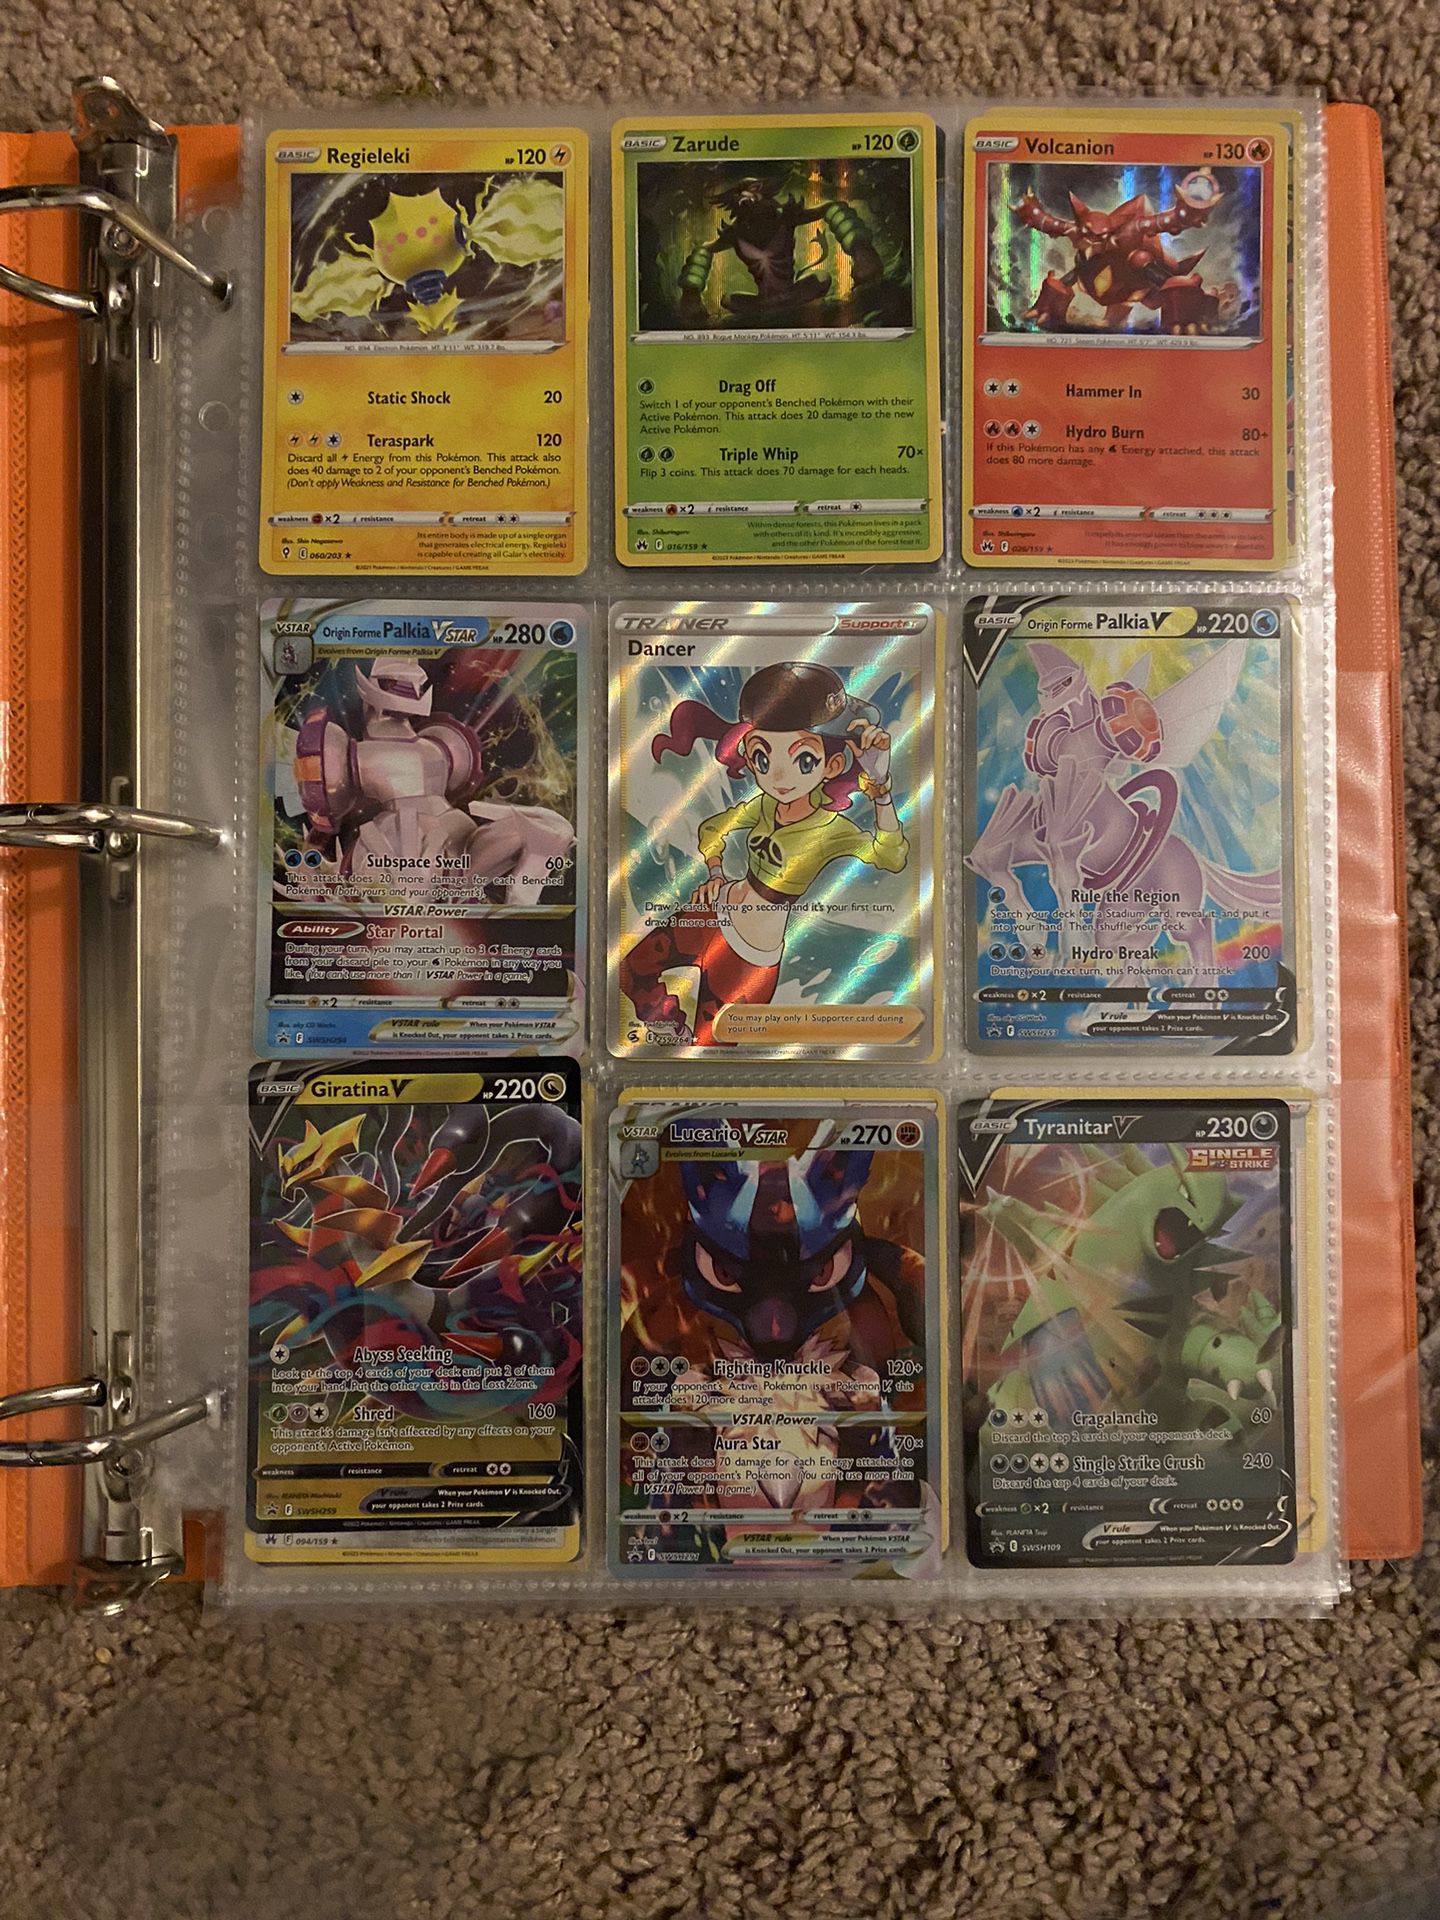 Pokémon Binder & Tins Full Of Cards